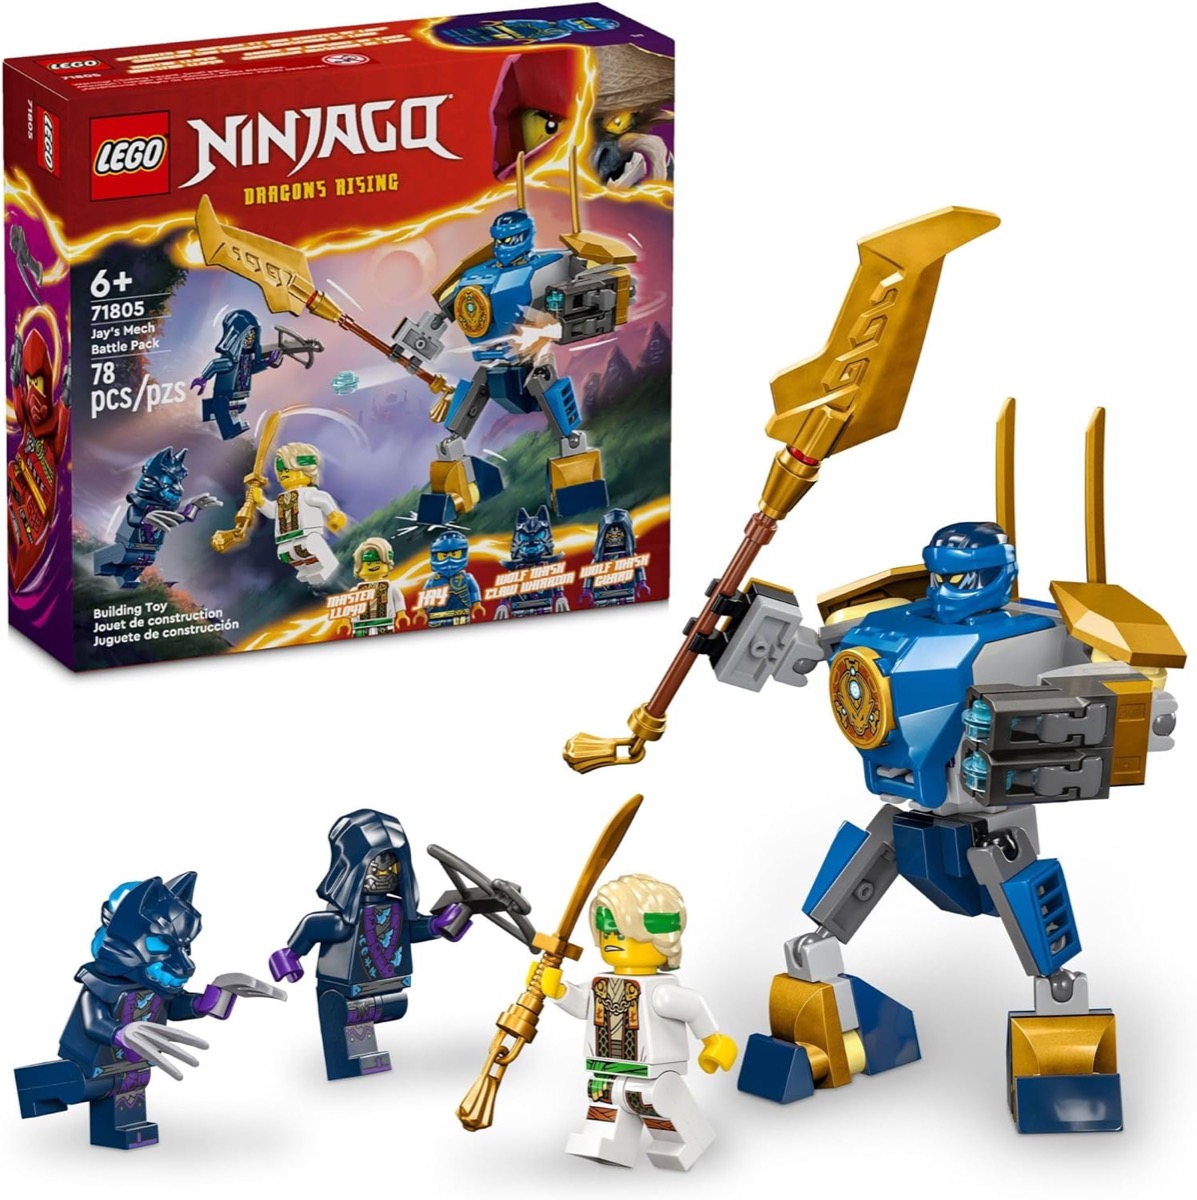 LEGO Jay’s Mech Battle Pack from "Ninjago" 